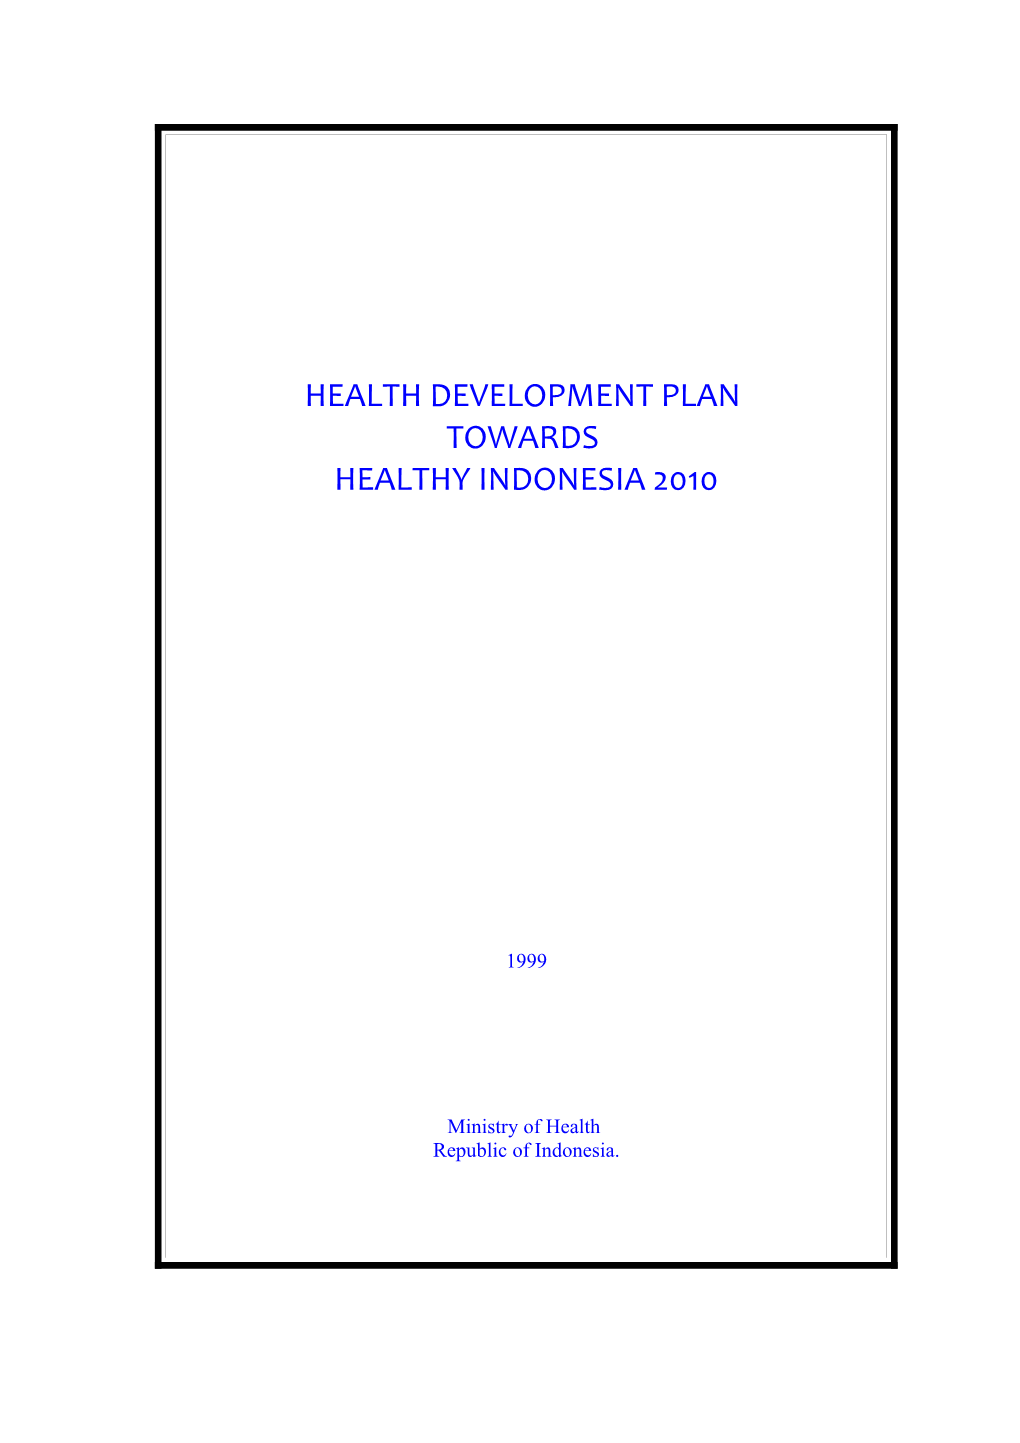 Health Development Plan Towards Healthy Indonesia 2010